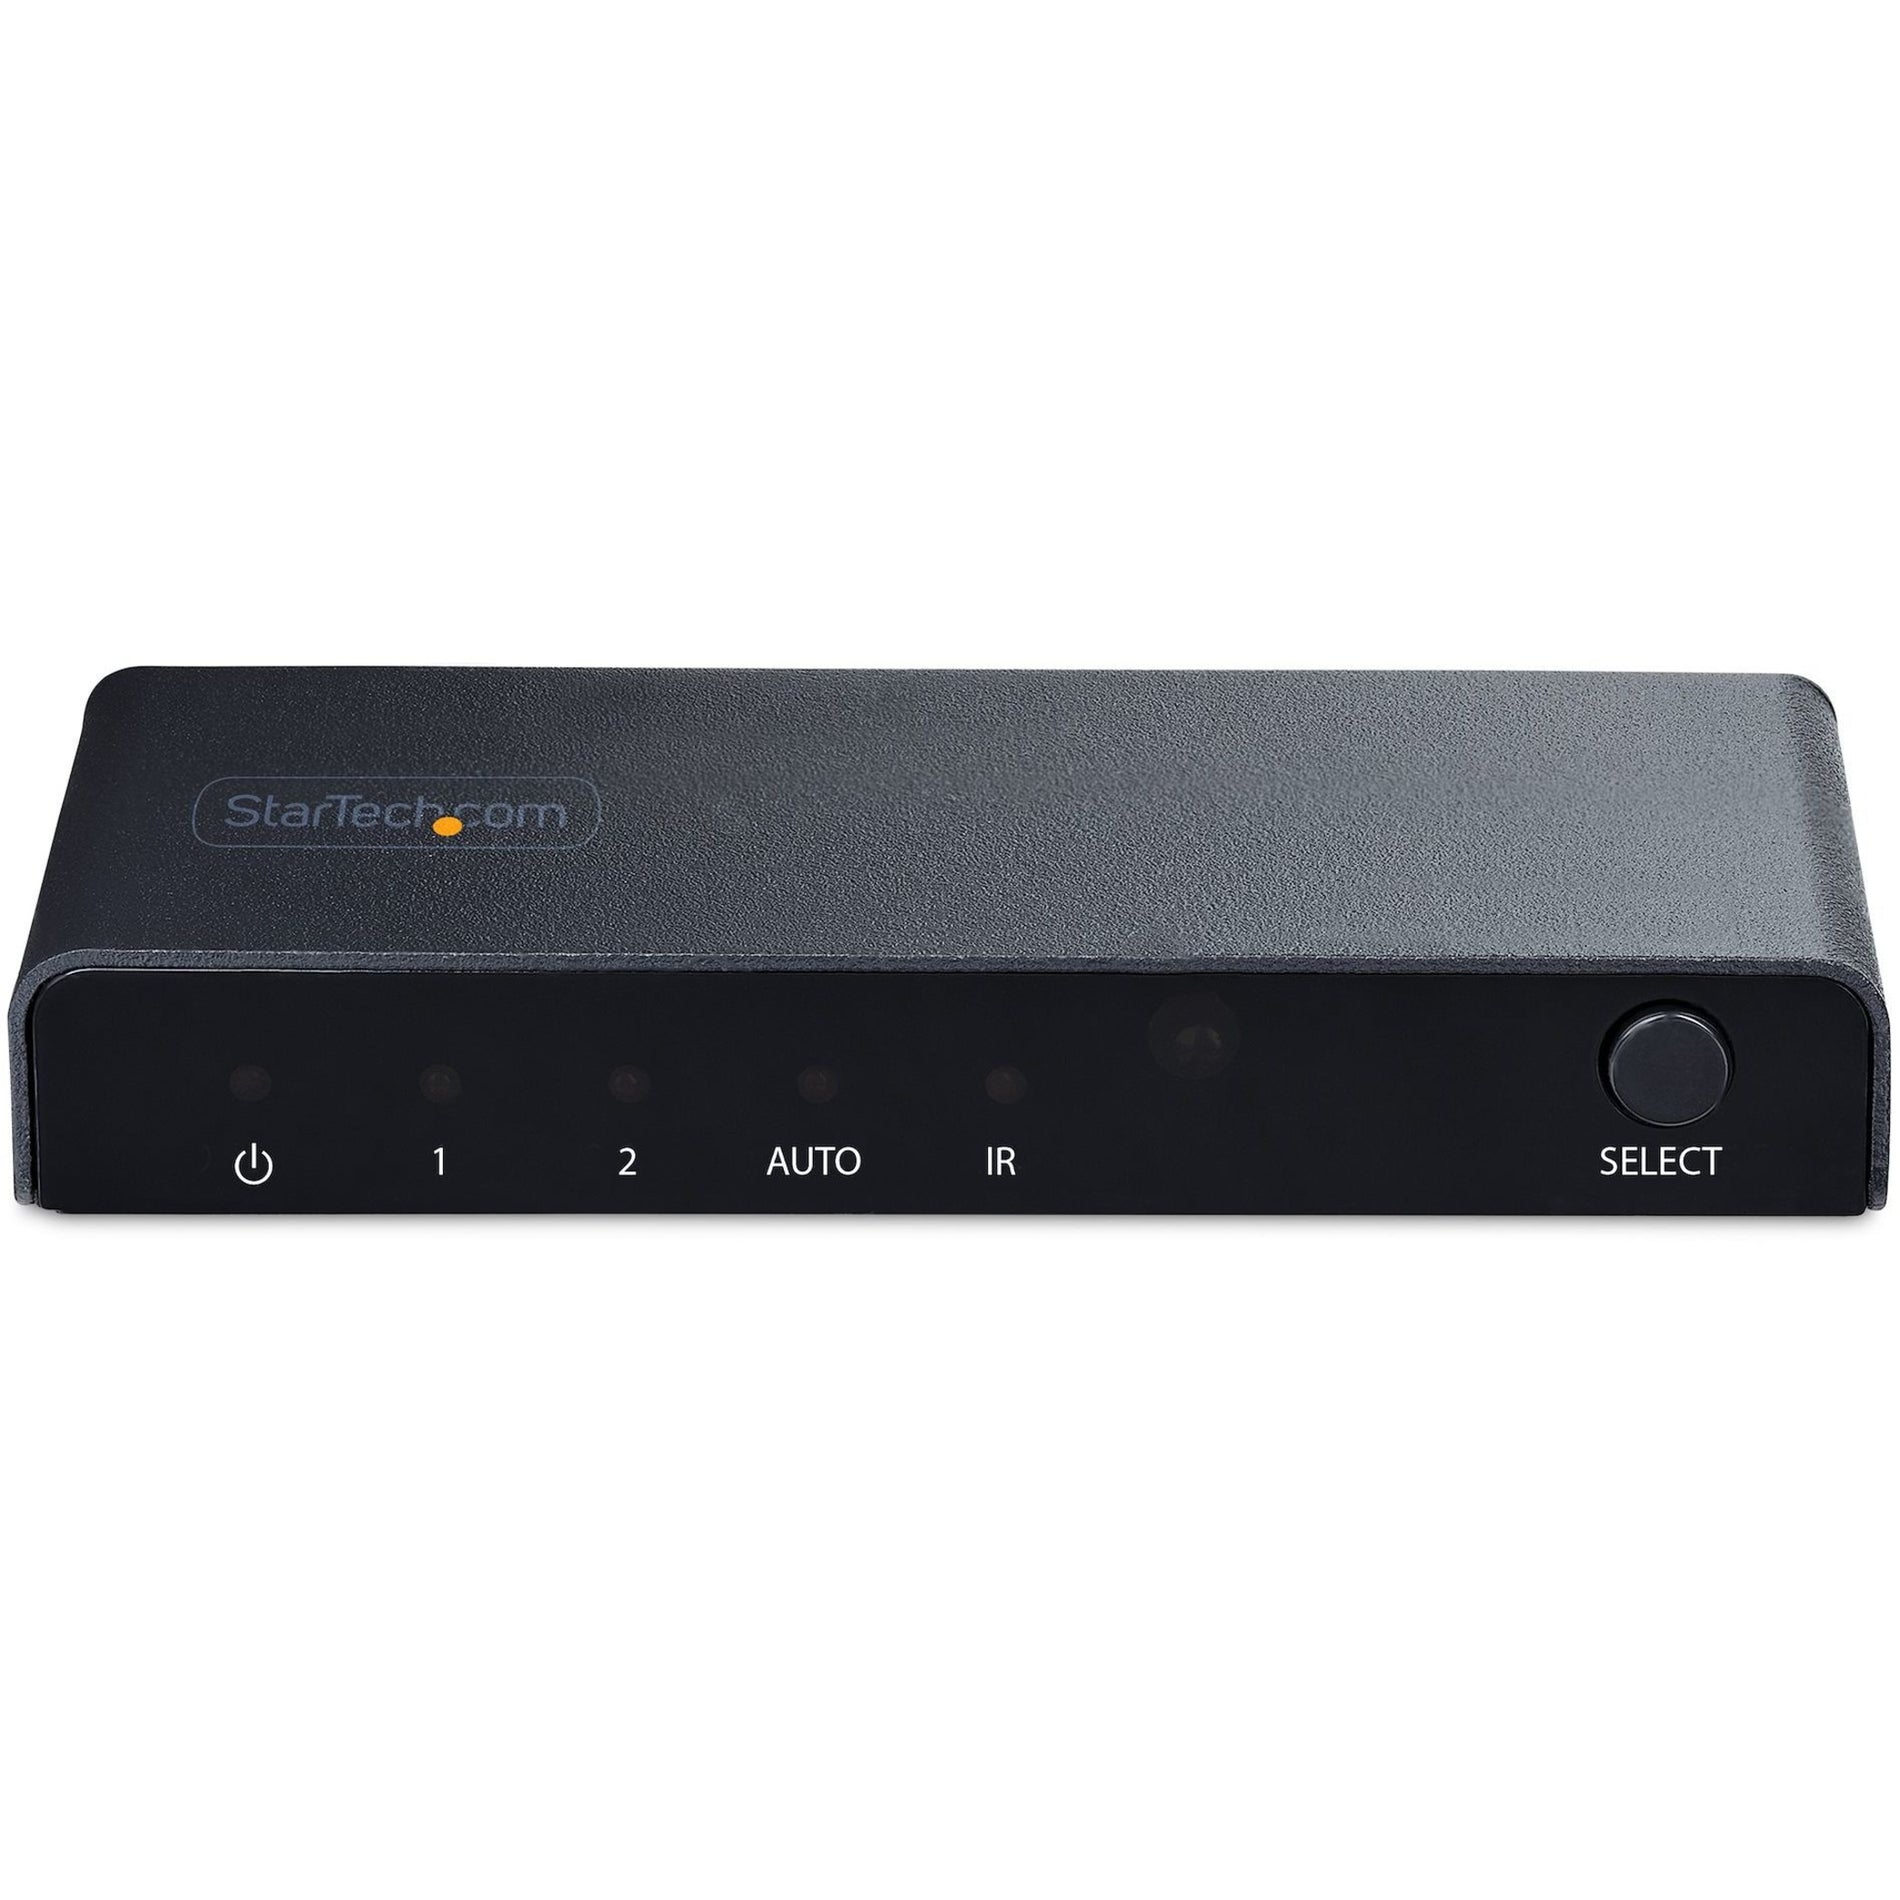 StarTech.com 2PORT-HDMI-SWITCH-8K 2-Port HDMI Video Switch - 8K 60Hz, Easy HDMI Source Switching